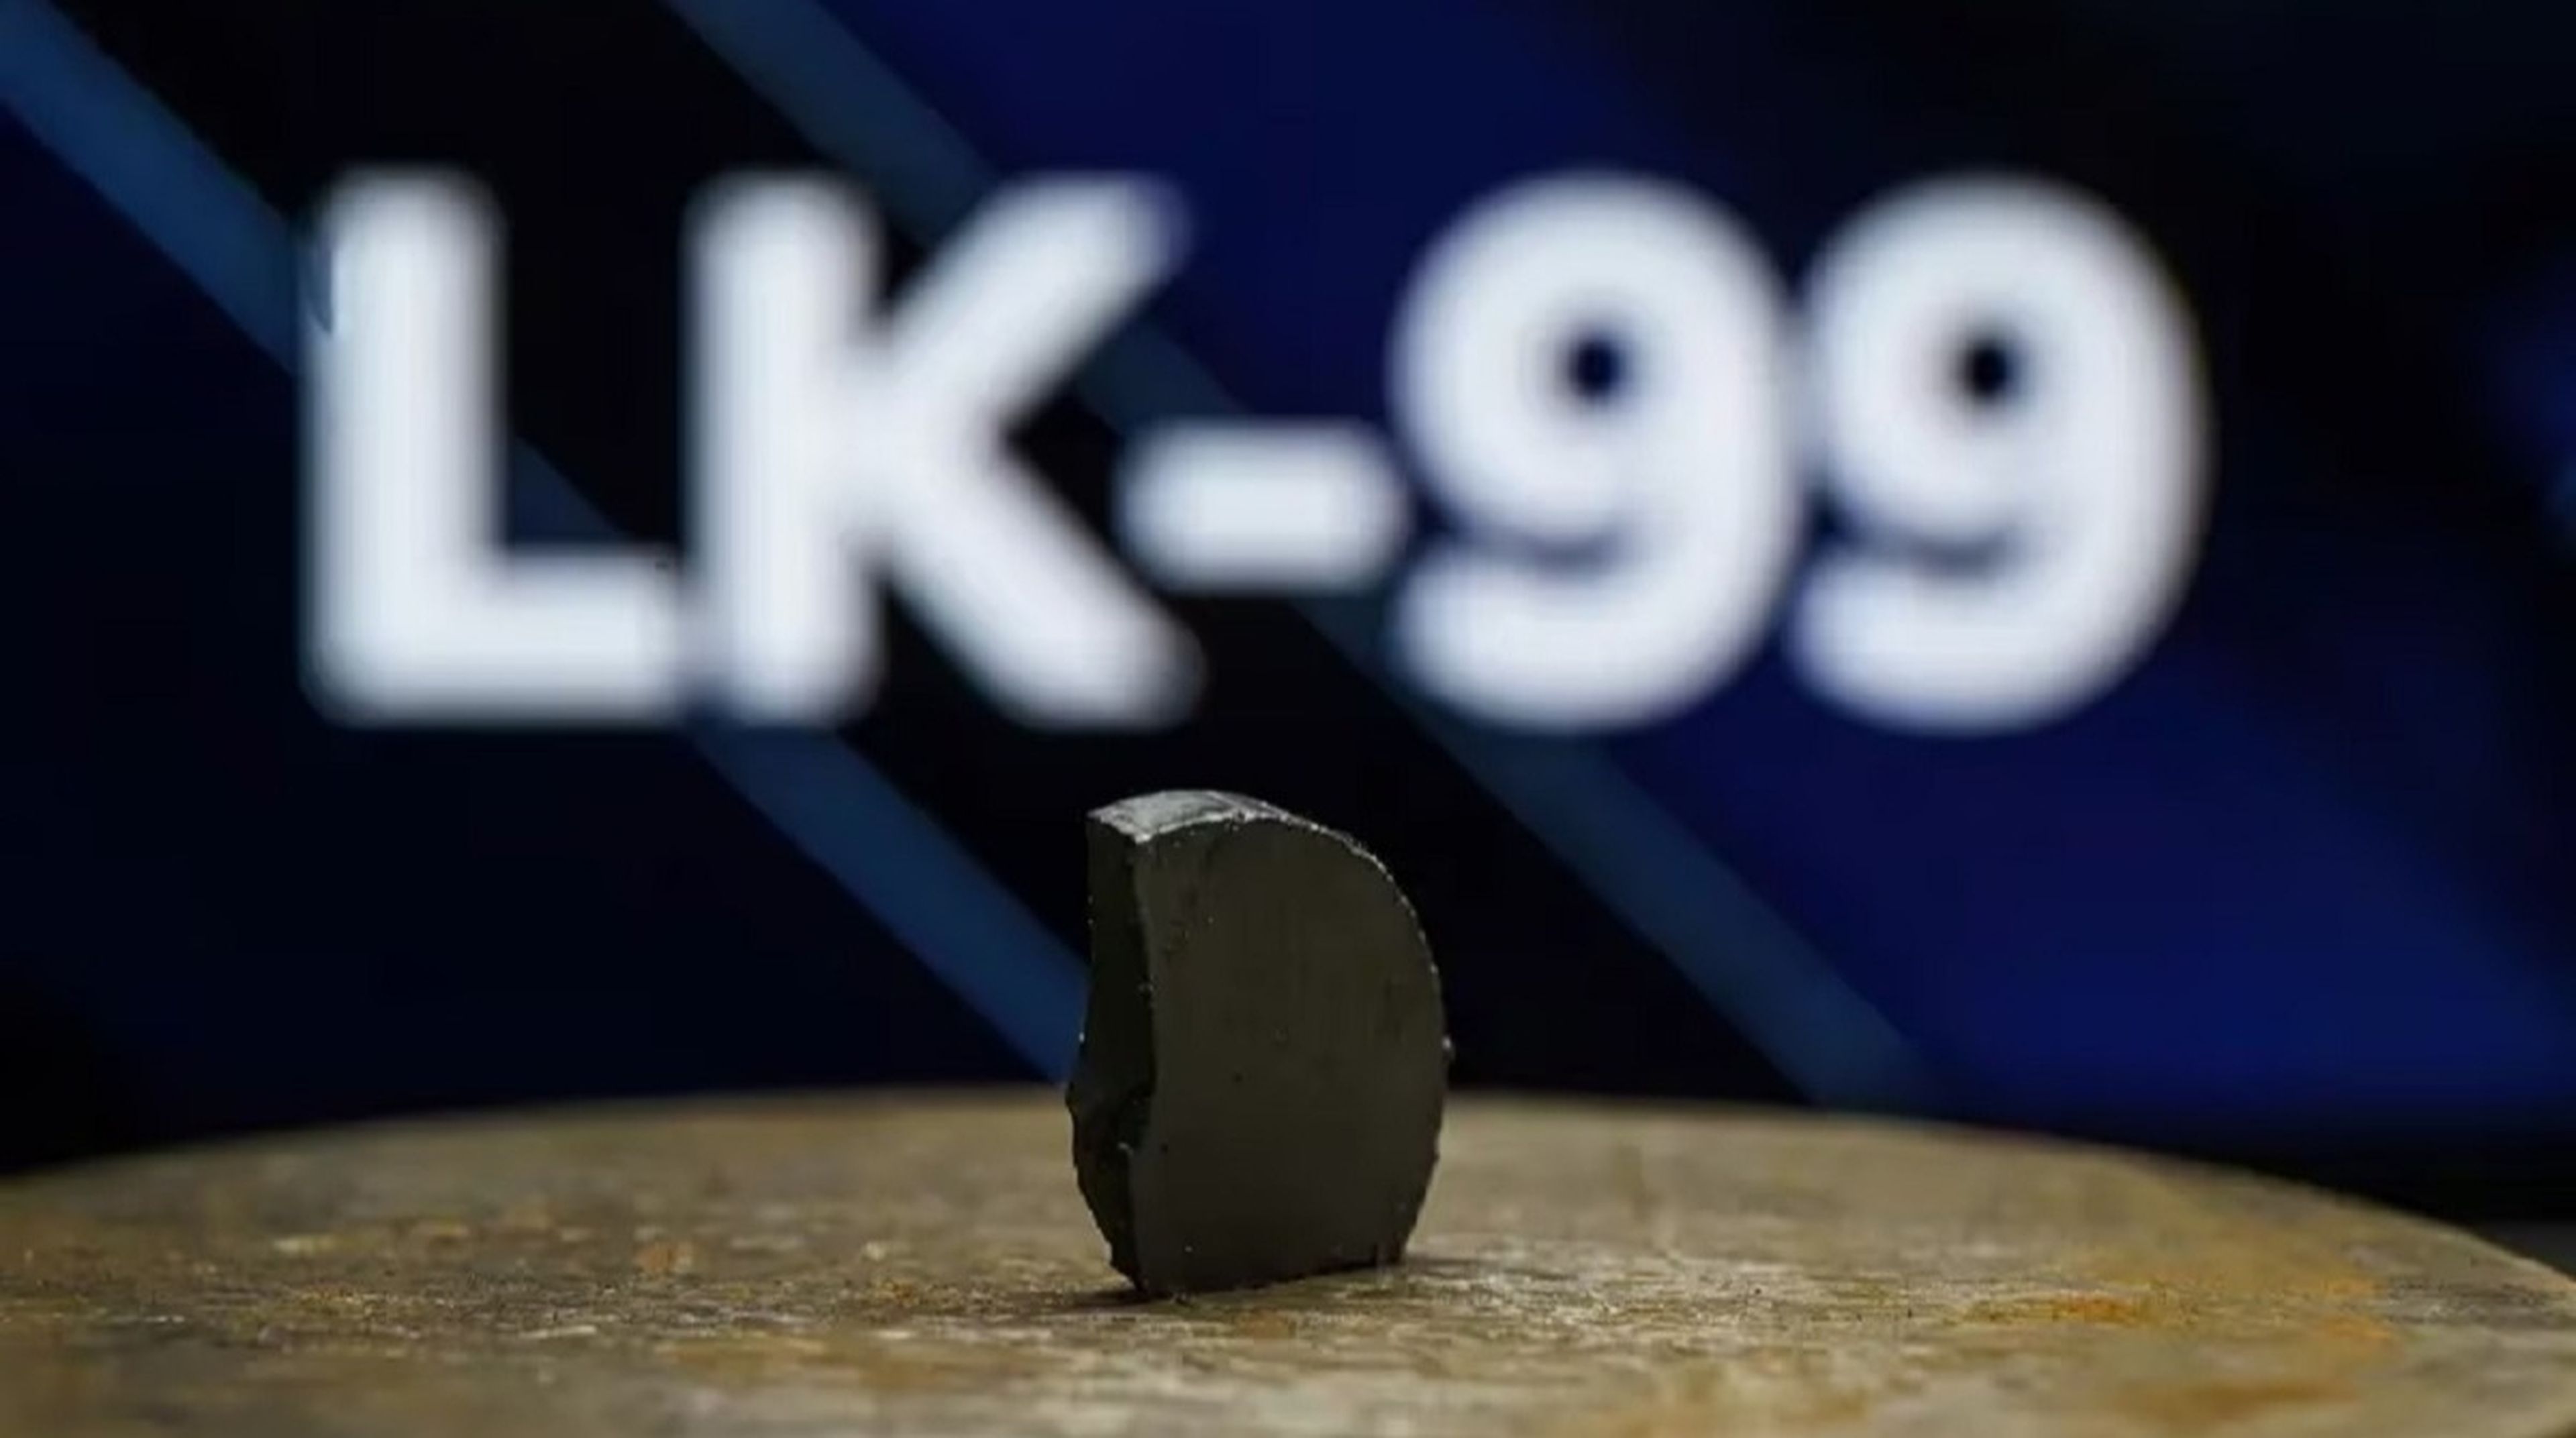 Superconductor LK-99